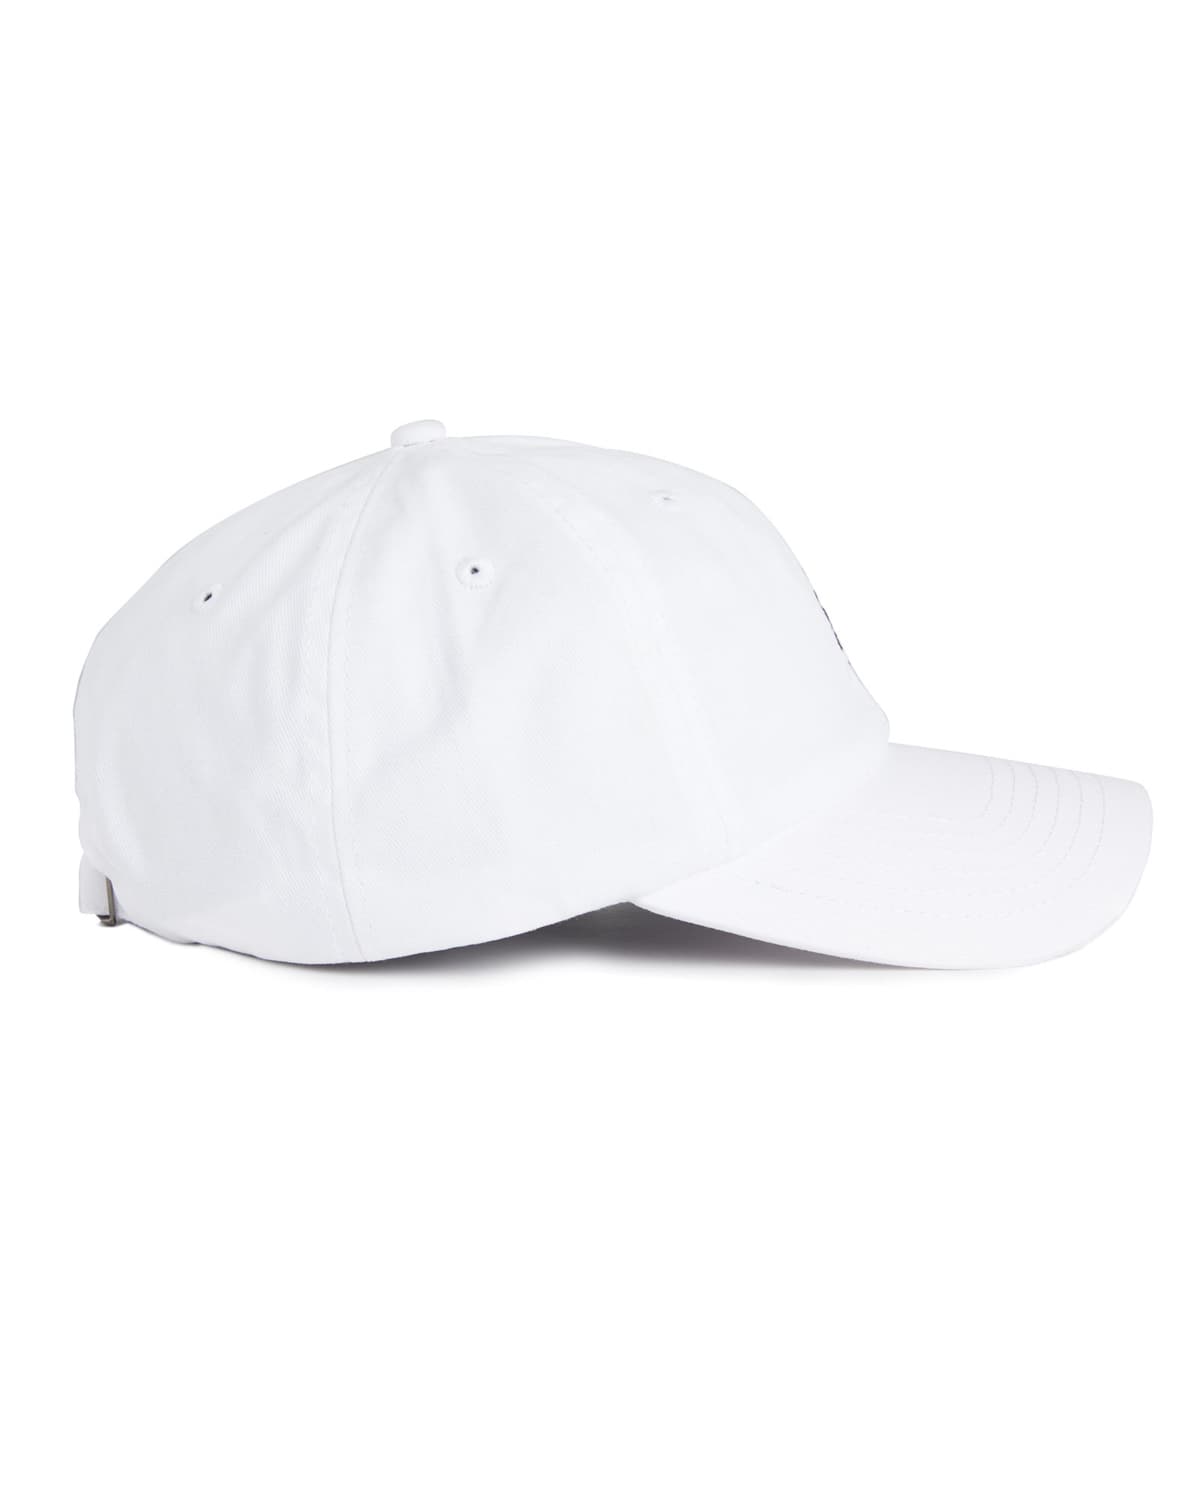 Bass Canyon Dad Hat - White